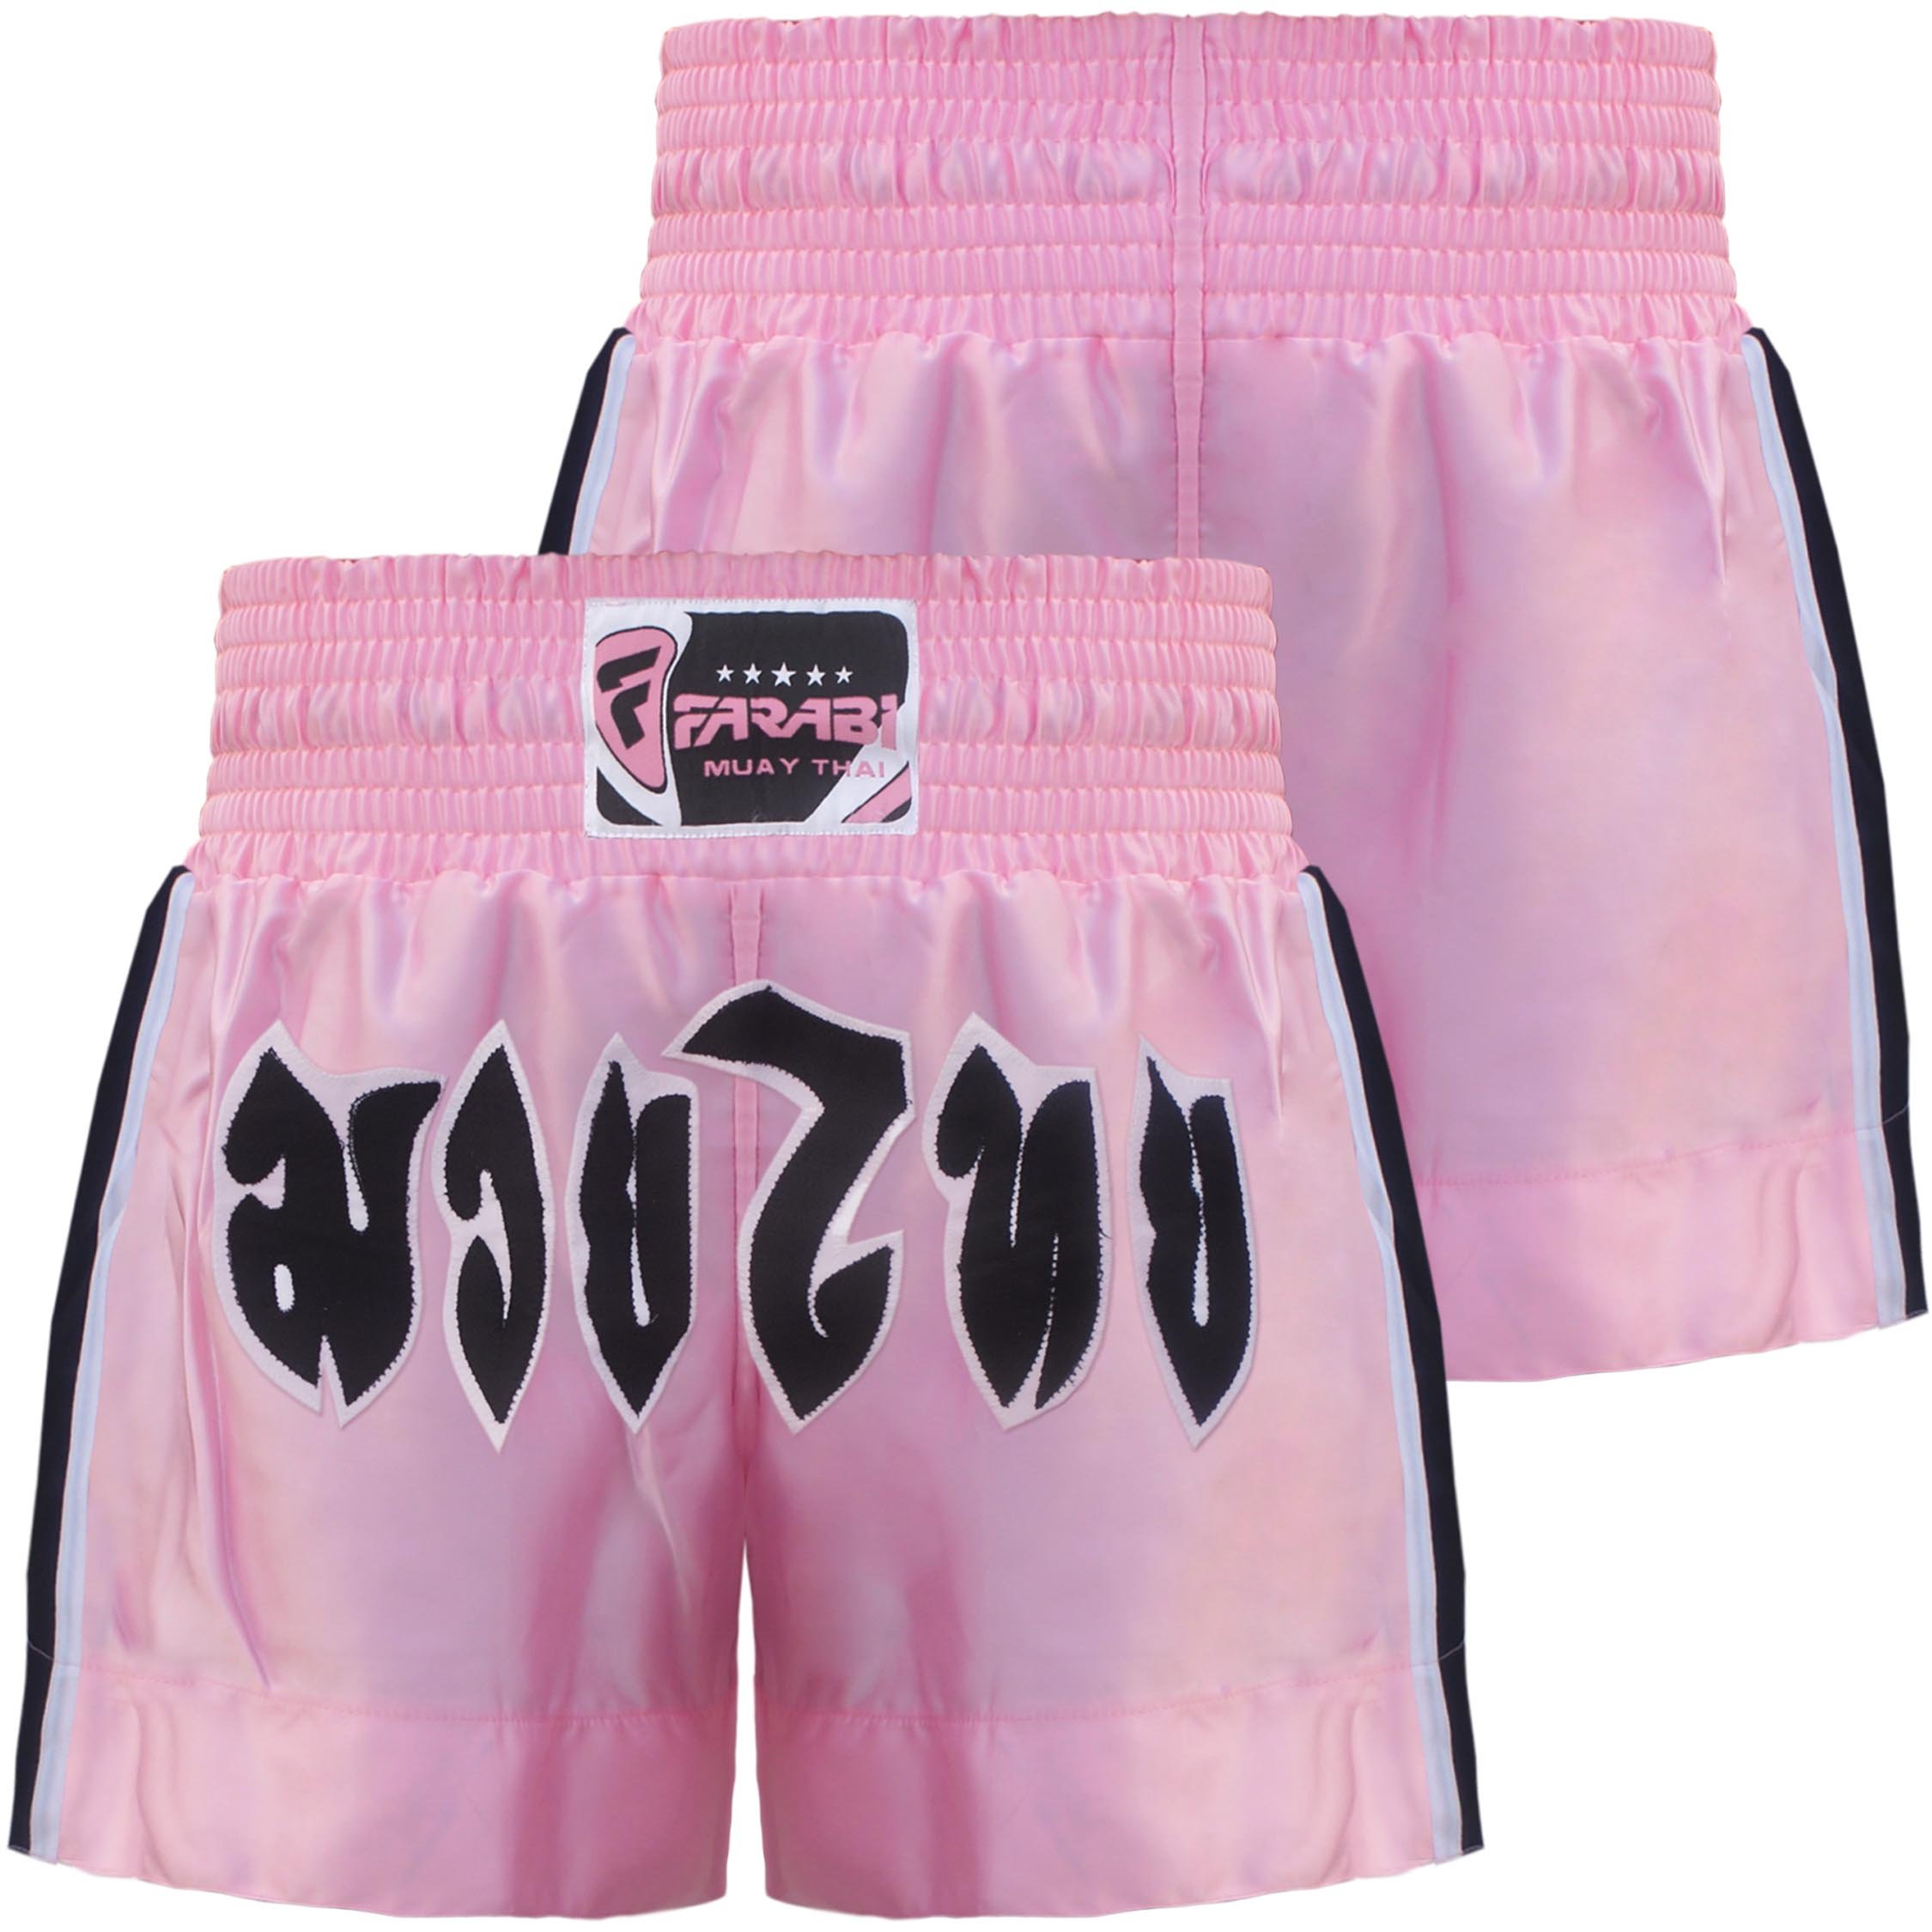 Farabi Sports Muay Thai Shorts - Training Short MMA Kampfsport Boxshorts (Pink, Small)